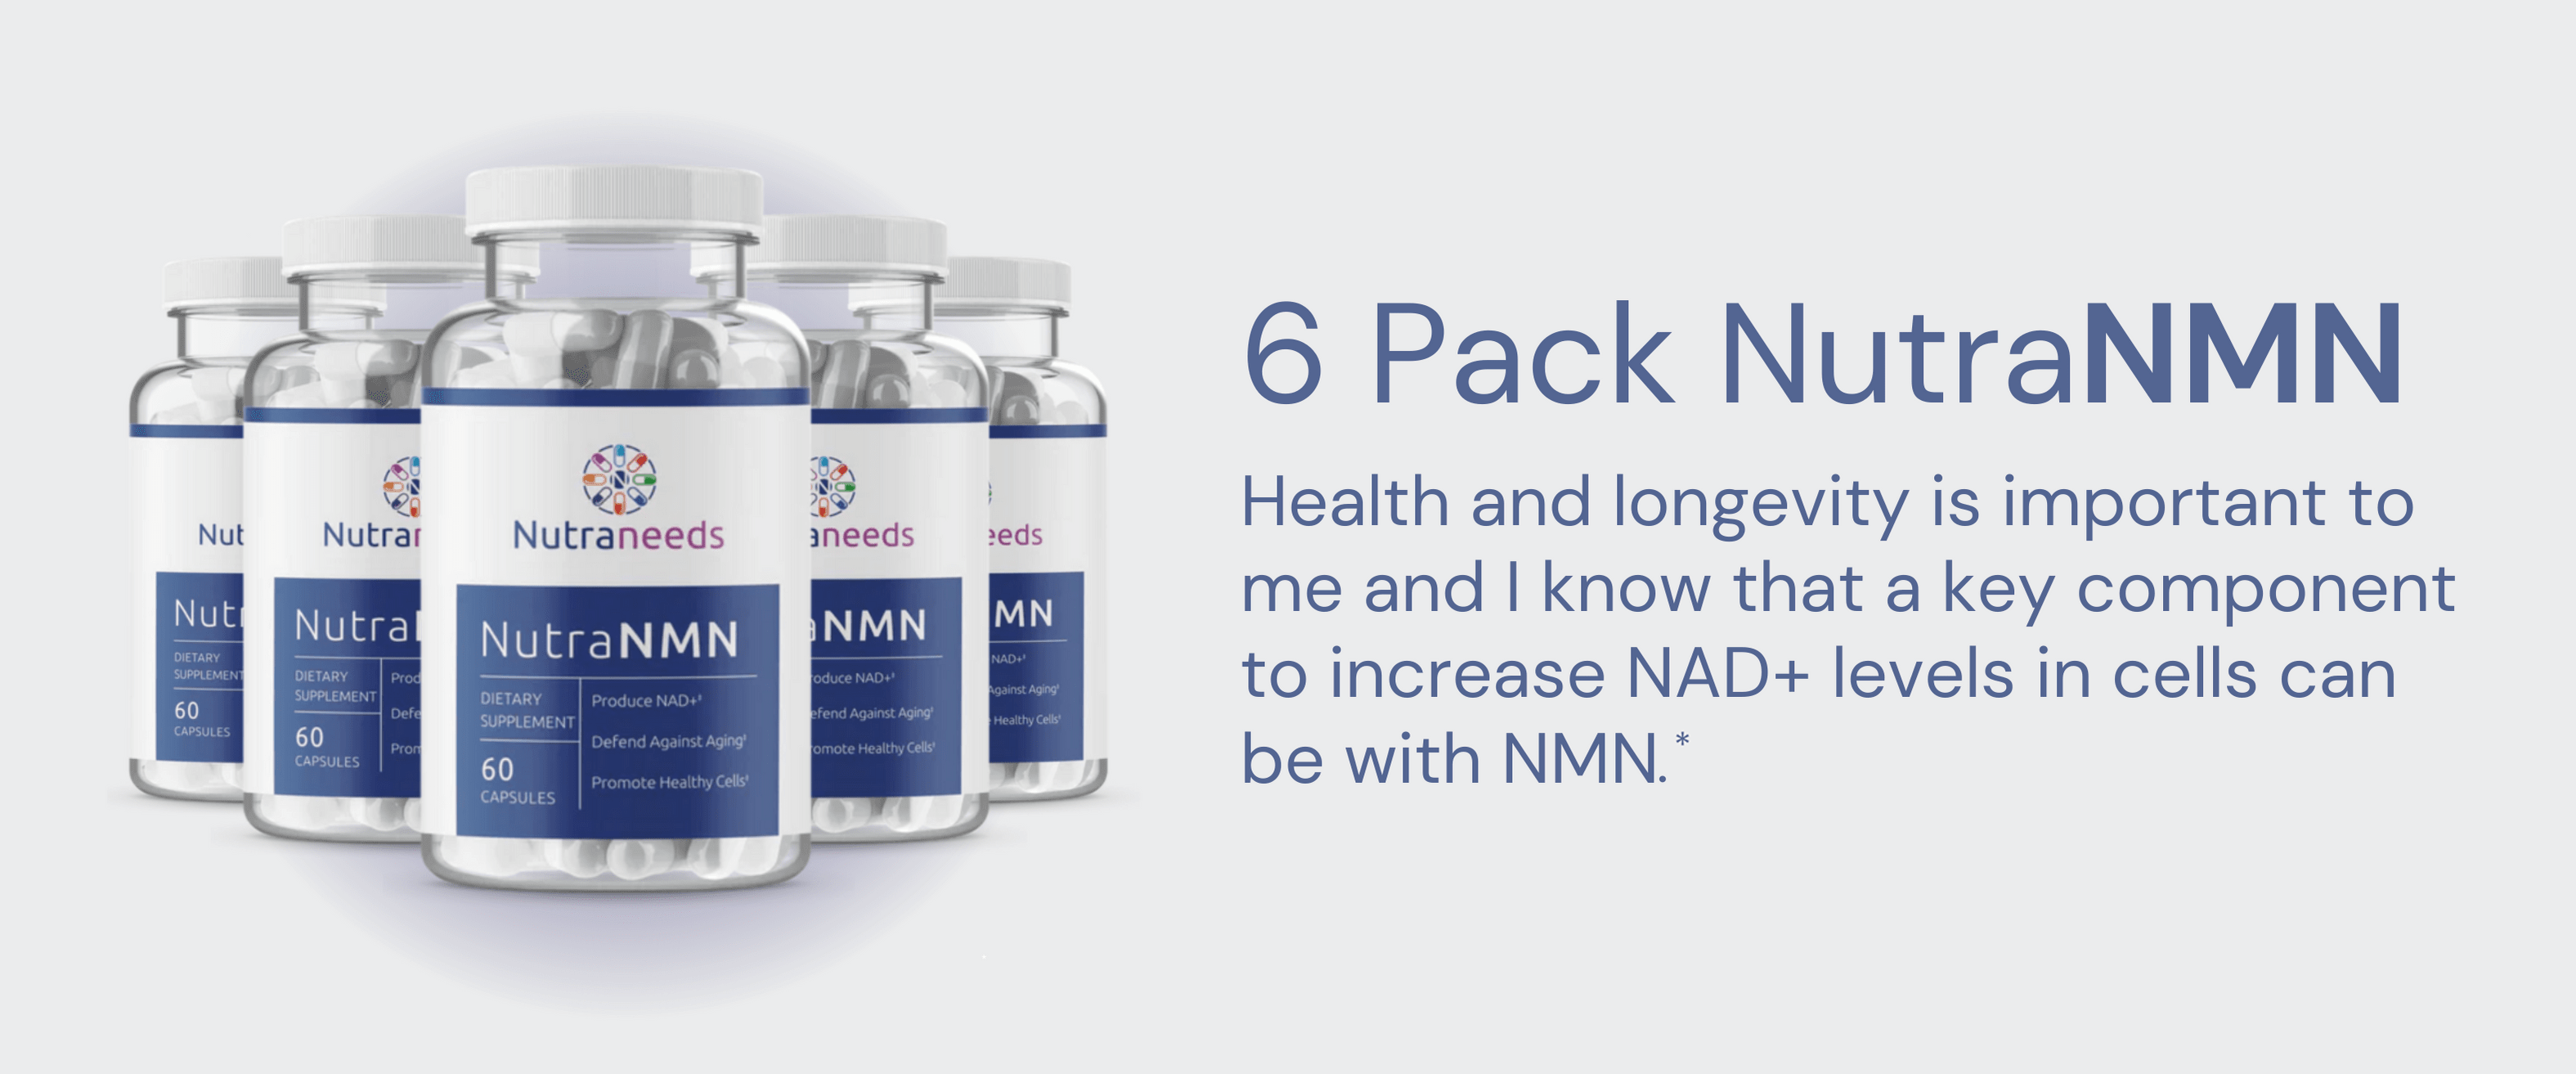 6 Pack NutraNMN for health and longevity